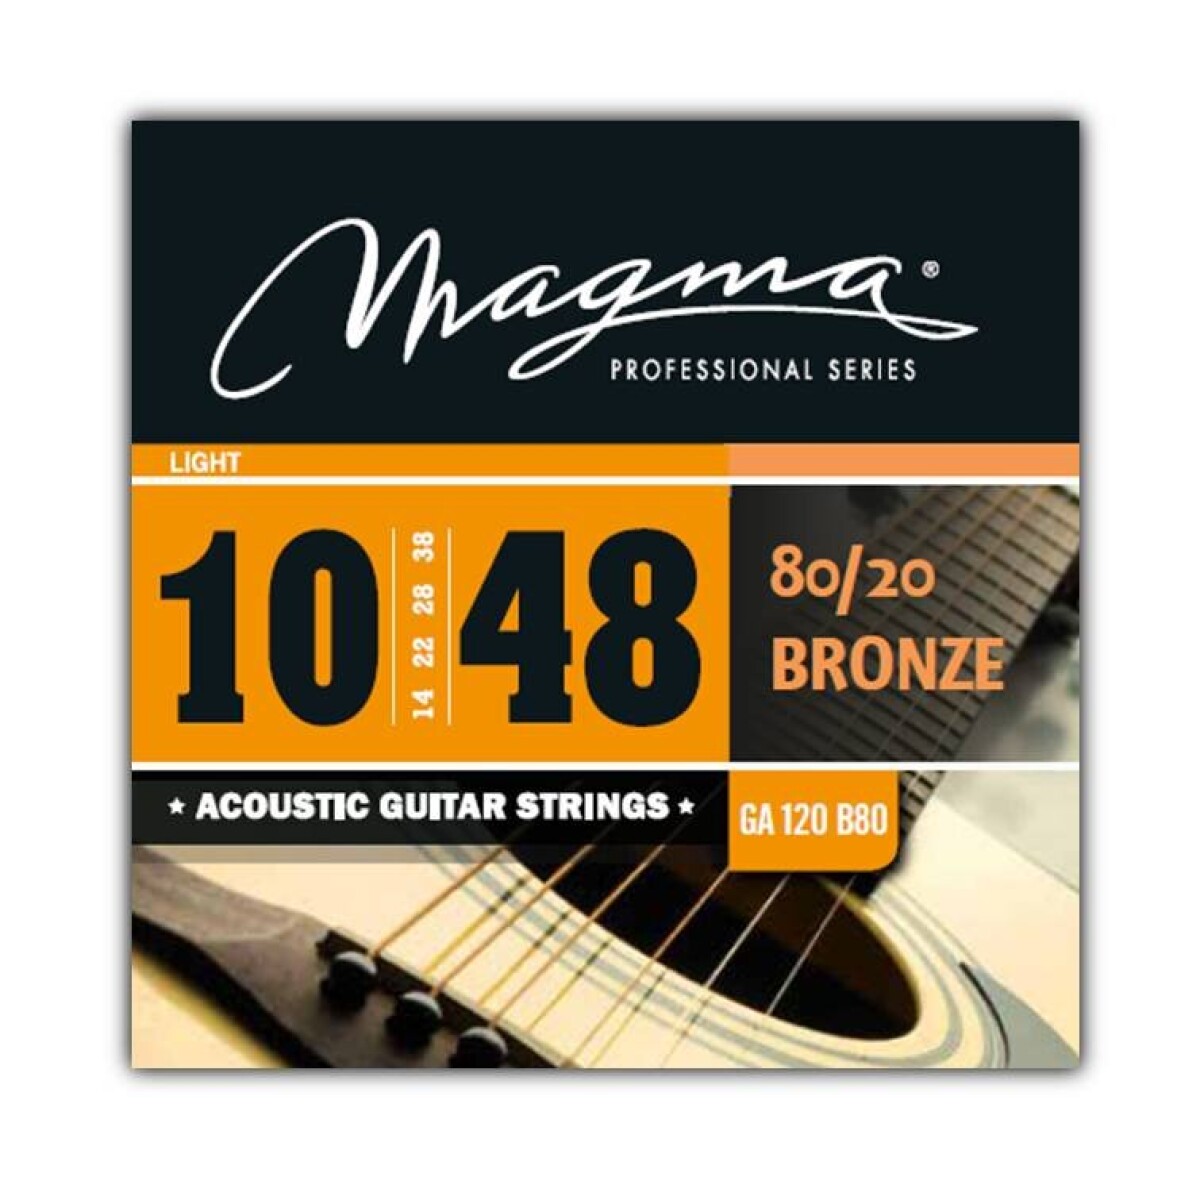 Encordado Guitarra Acustica Magma Bronce 80/20 .010 GA120B80 